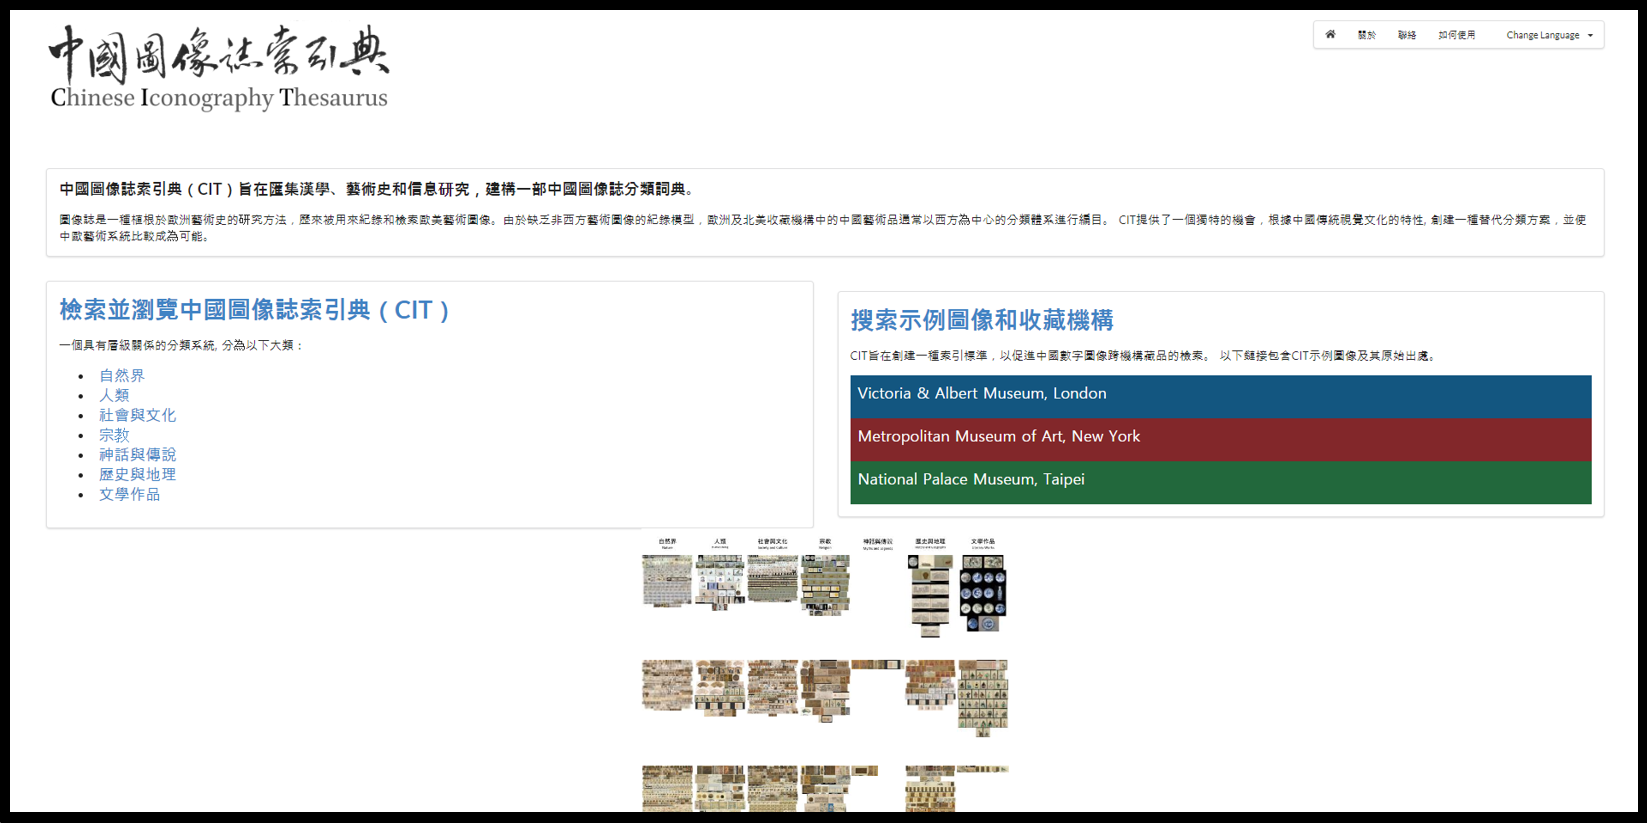 Chinese Iconography Thesaurus 웹사이트 가기